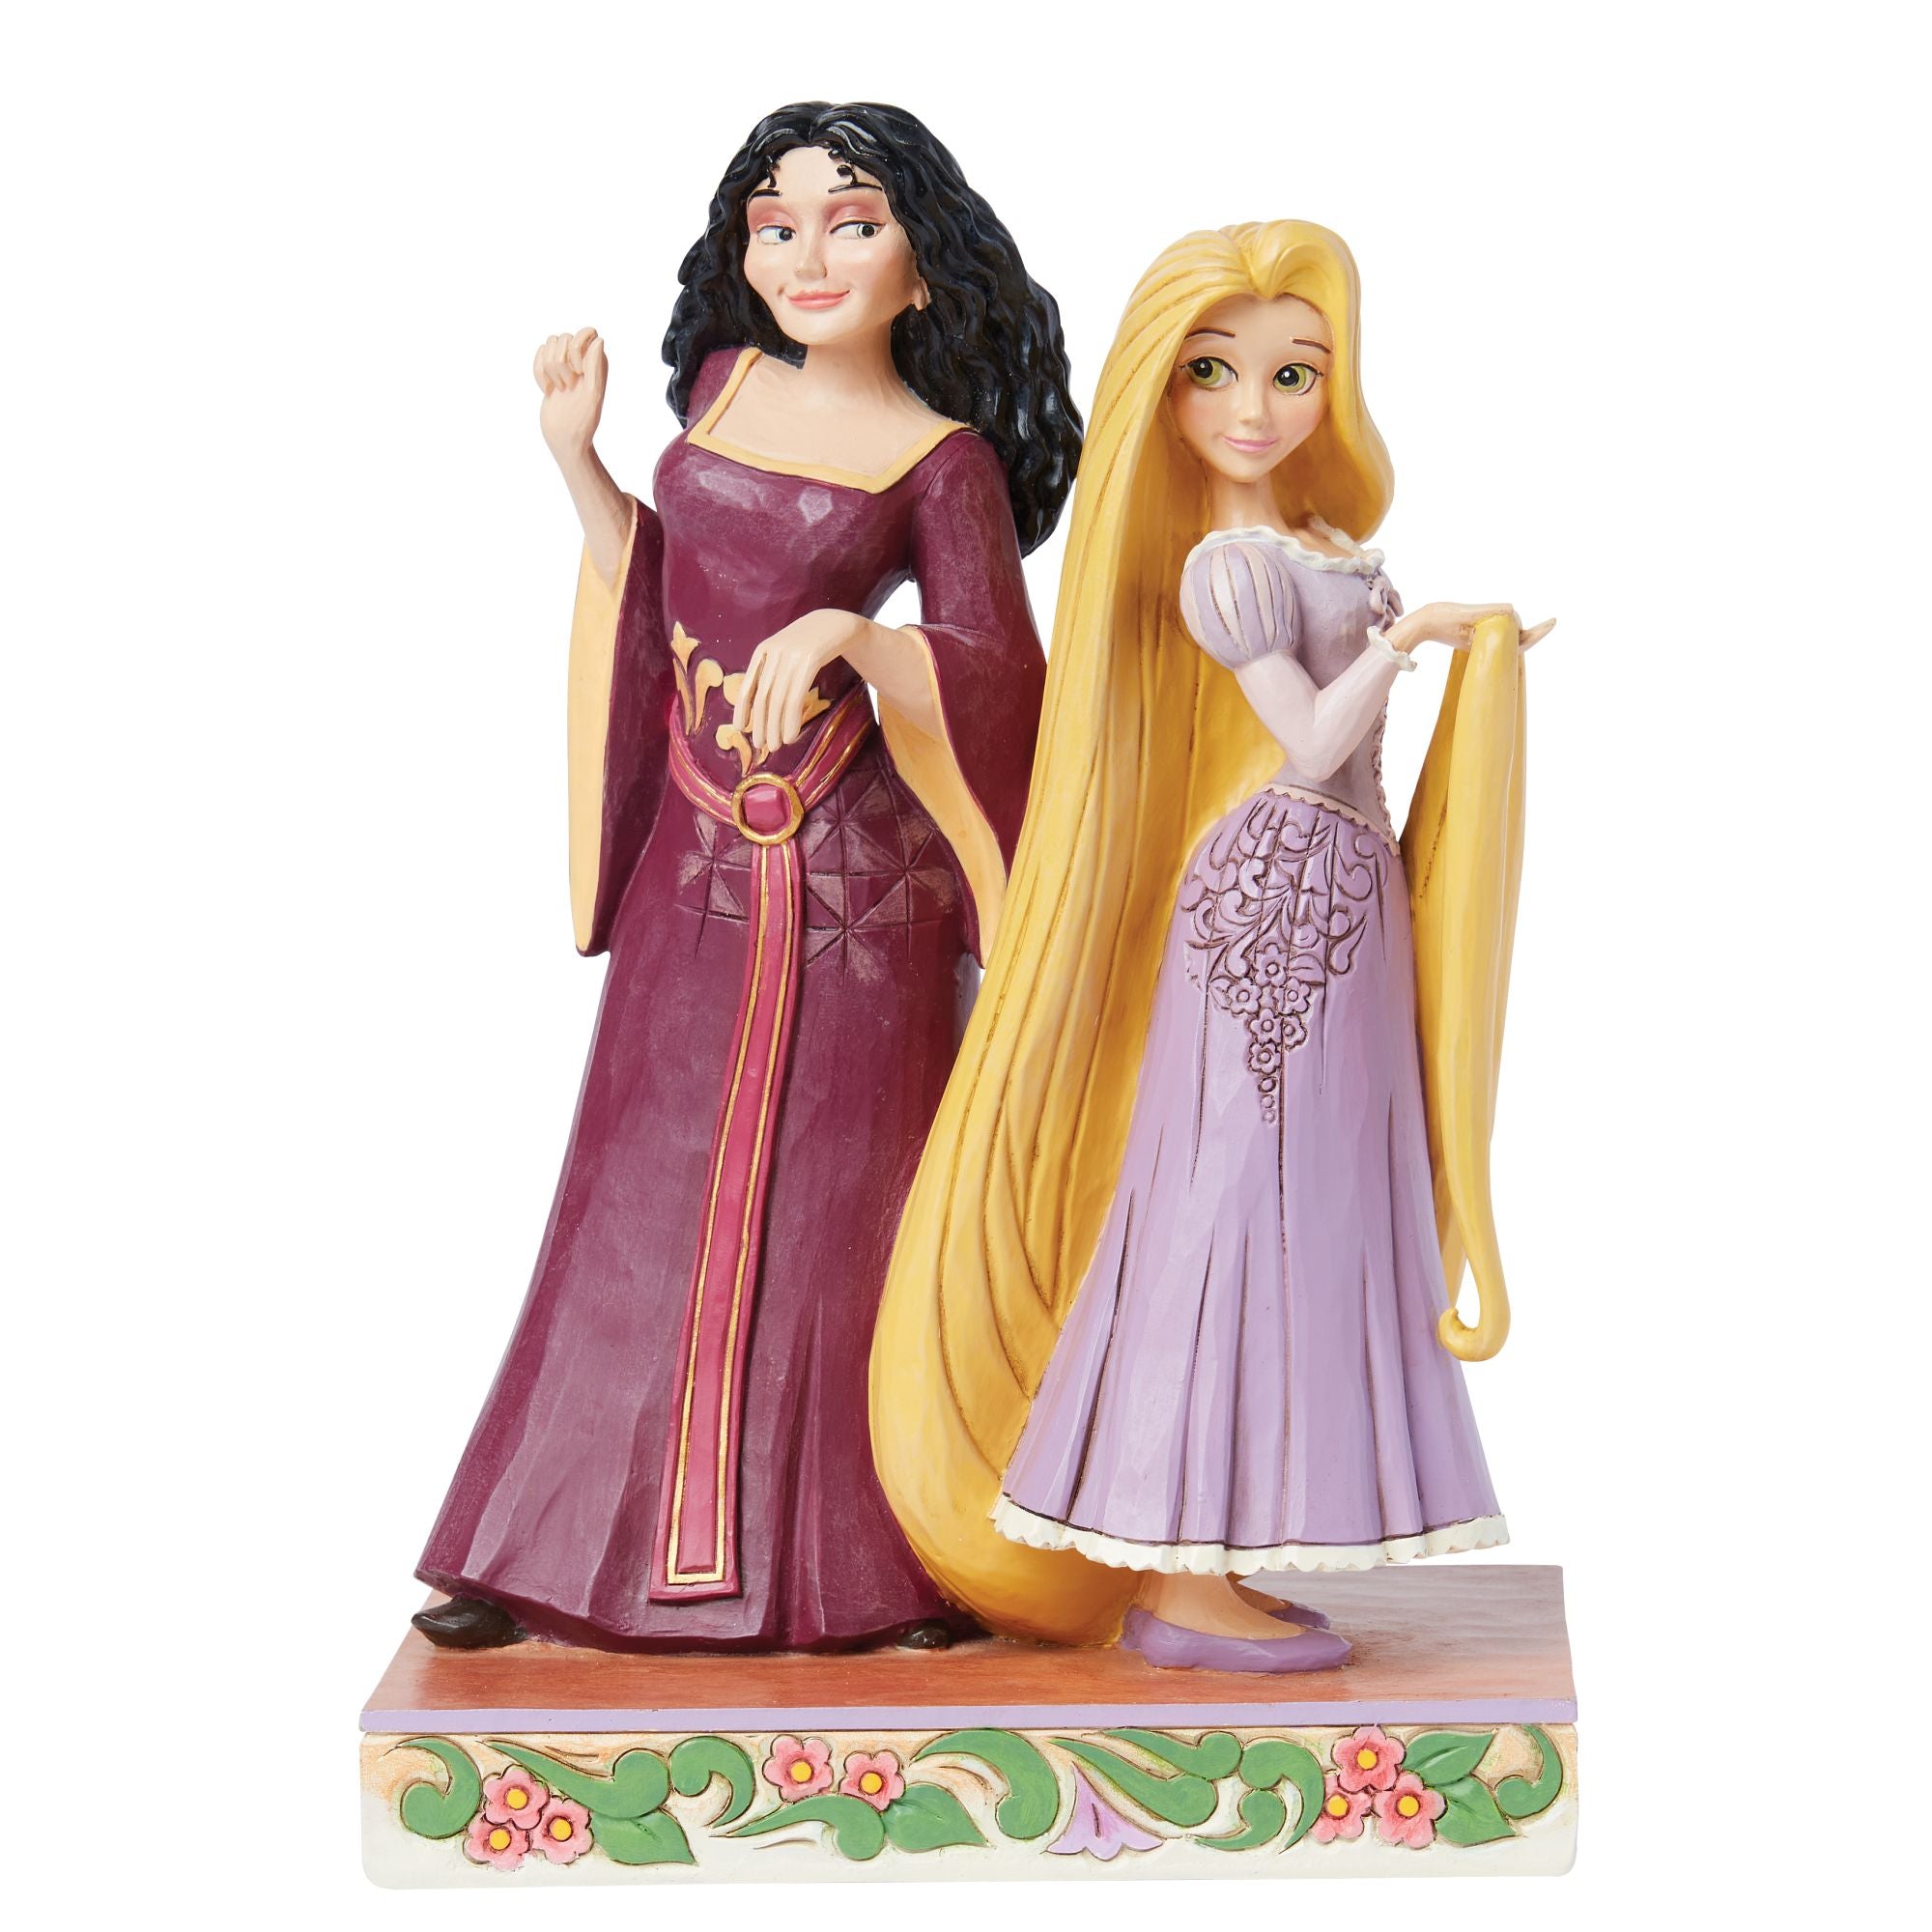 Rapunzel vs. Mother Gothel